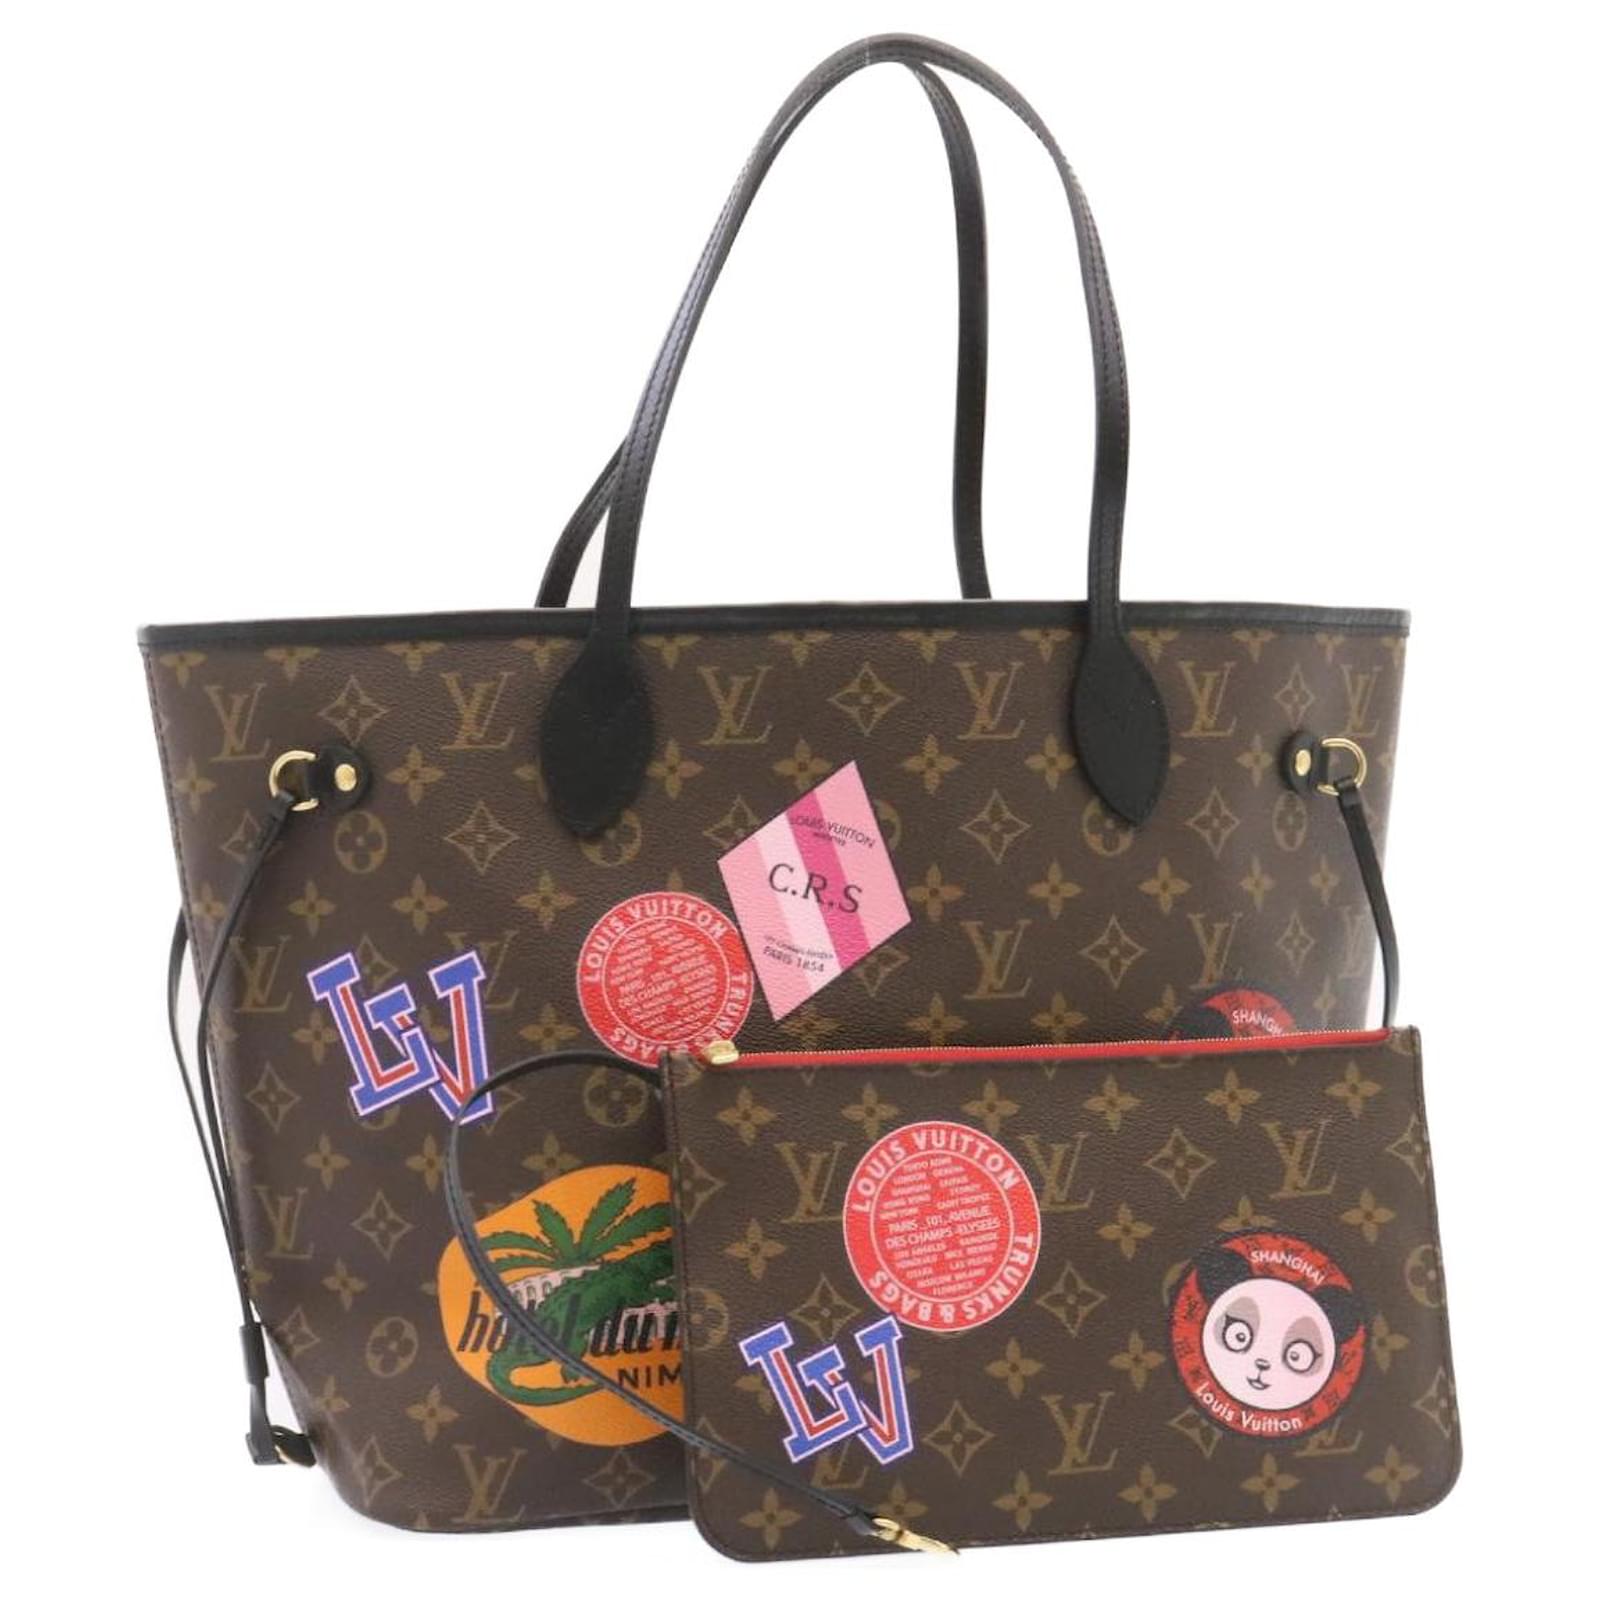 Louis Vuitton Since 1854 Monogram Tote Bags for Women